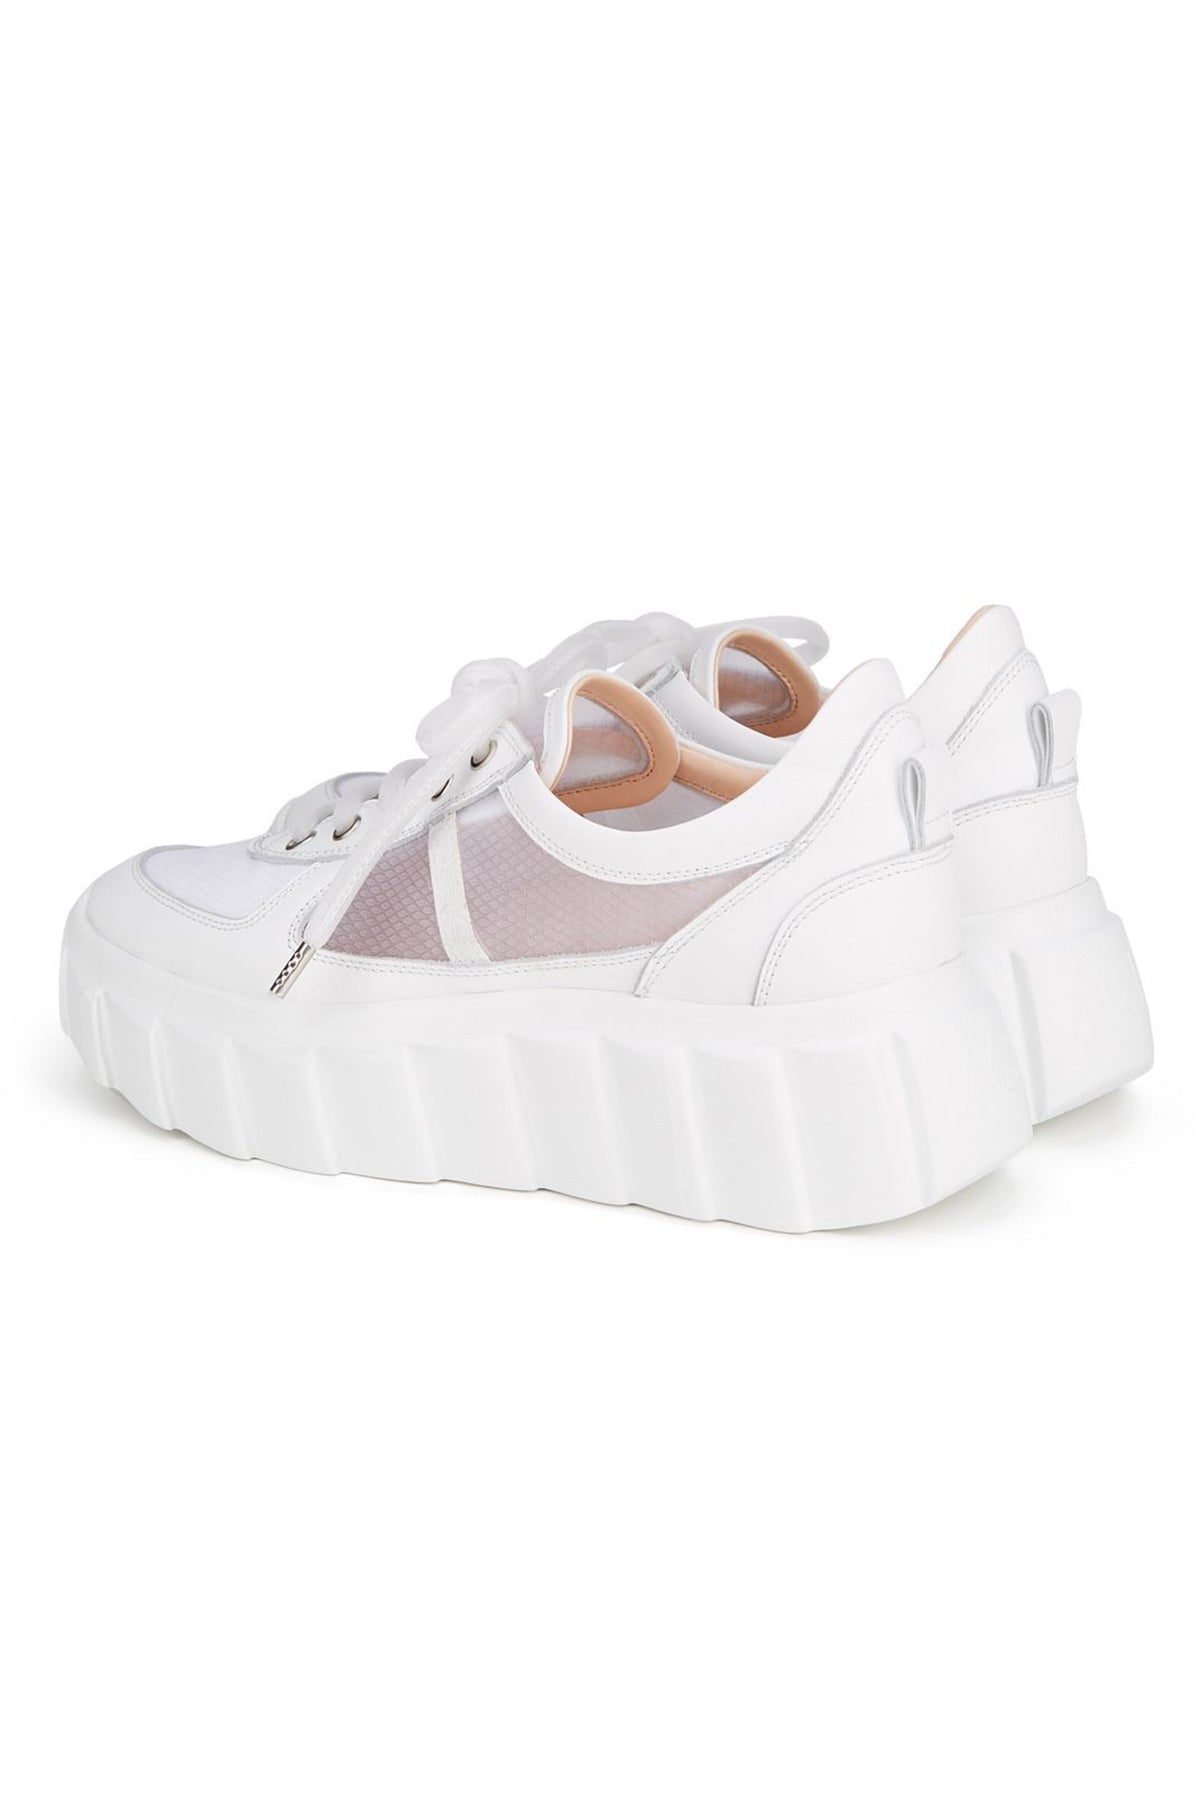 Agl Blondie Grid Tül Detaylı Deri Sneaker Ayakkabı-Libas Trendy Fashion Store